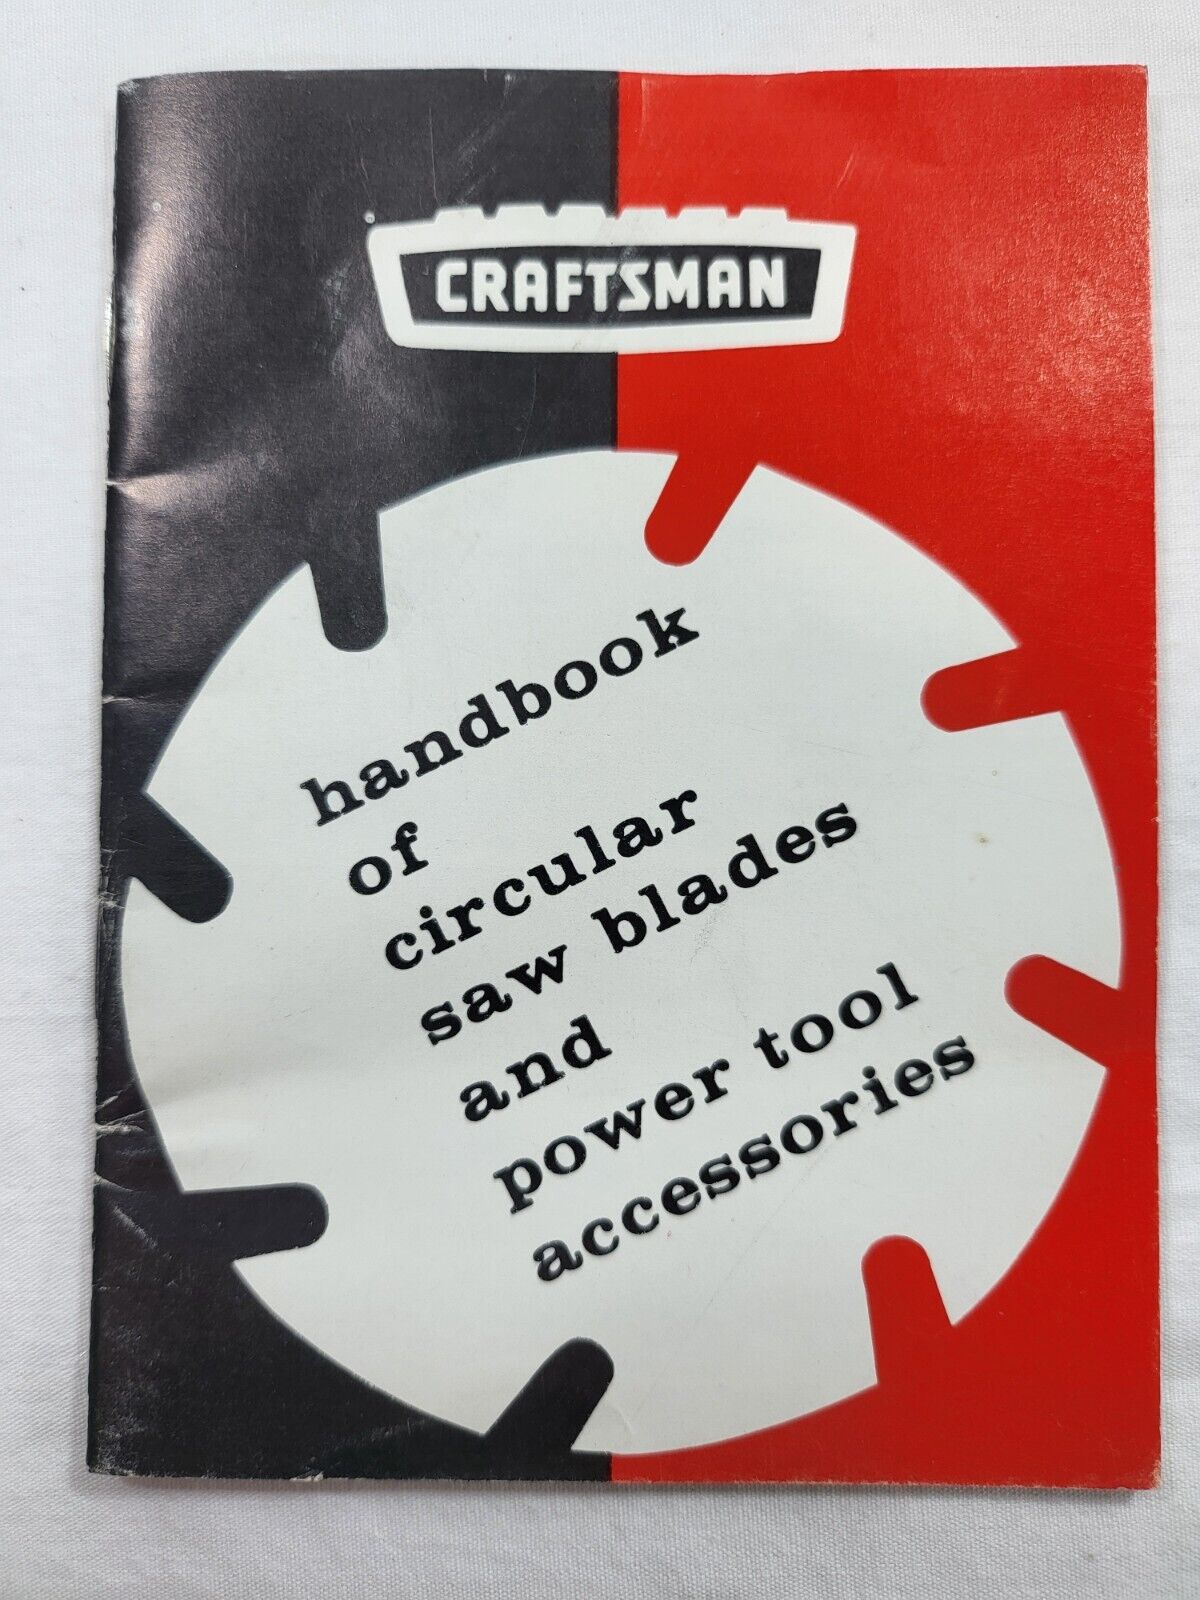 1965 Sears Craftsman Handbook of Circular Saw Blades & Power Tool Accessories